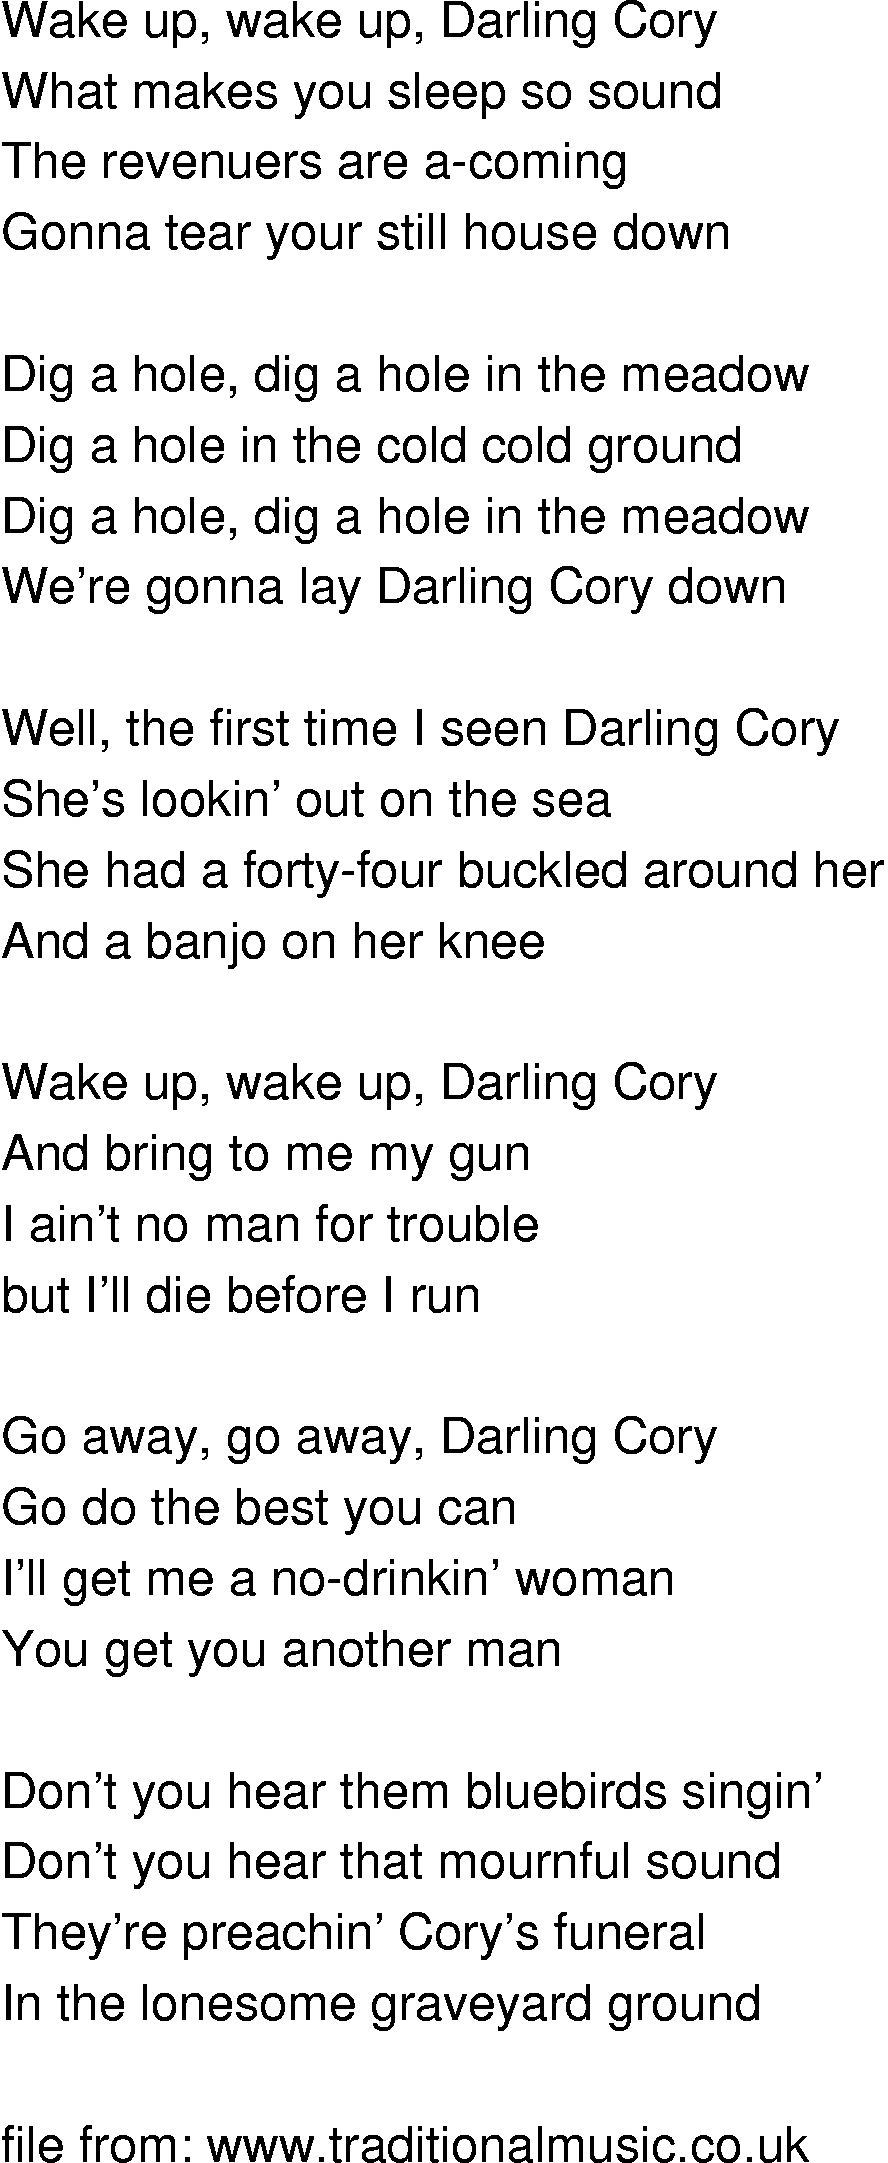 Old-Time (oldtimey) Song Lyrics - darling cory